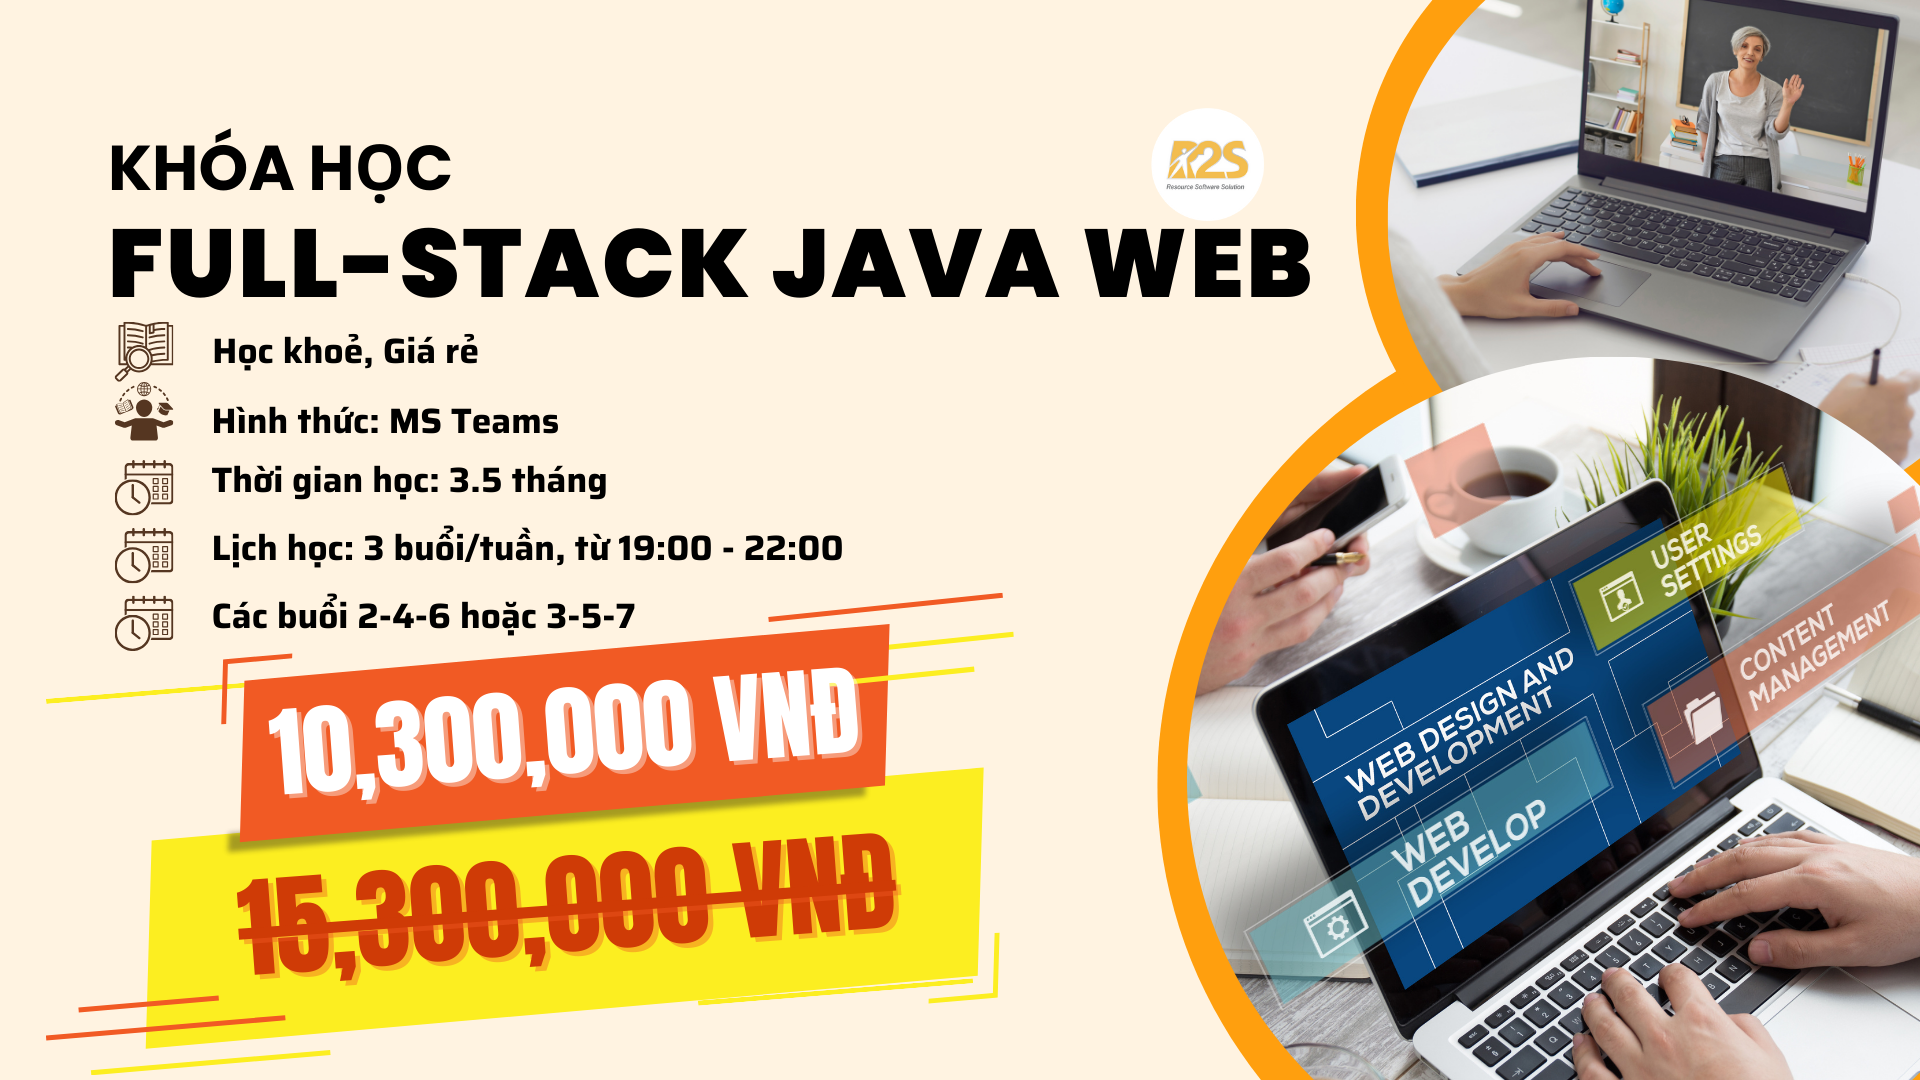 Khoá học Full-stack Java Web